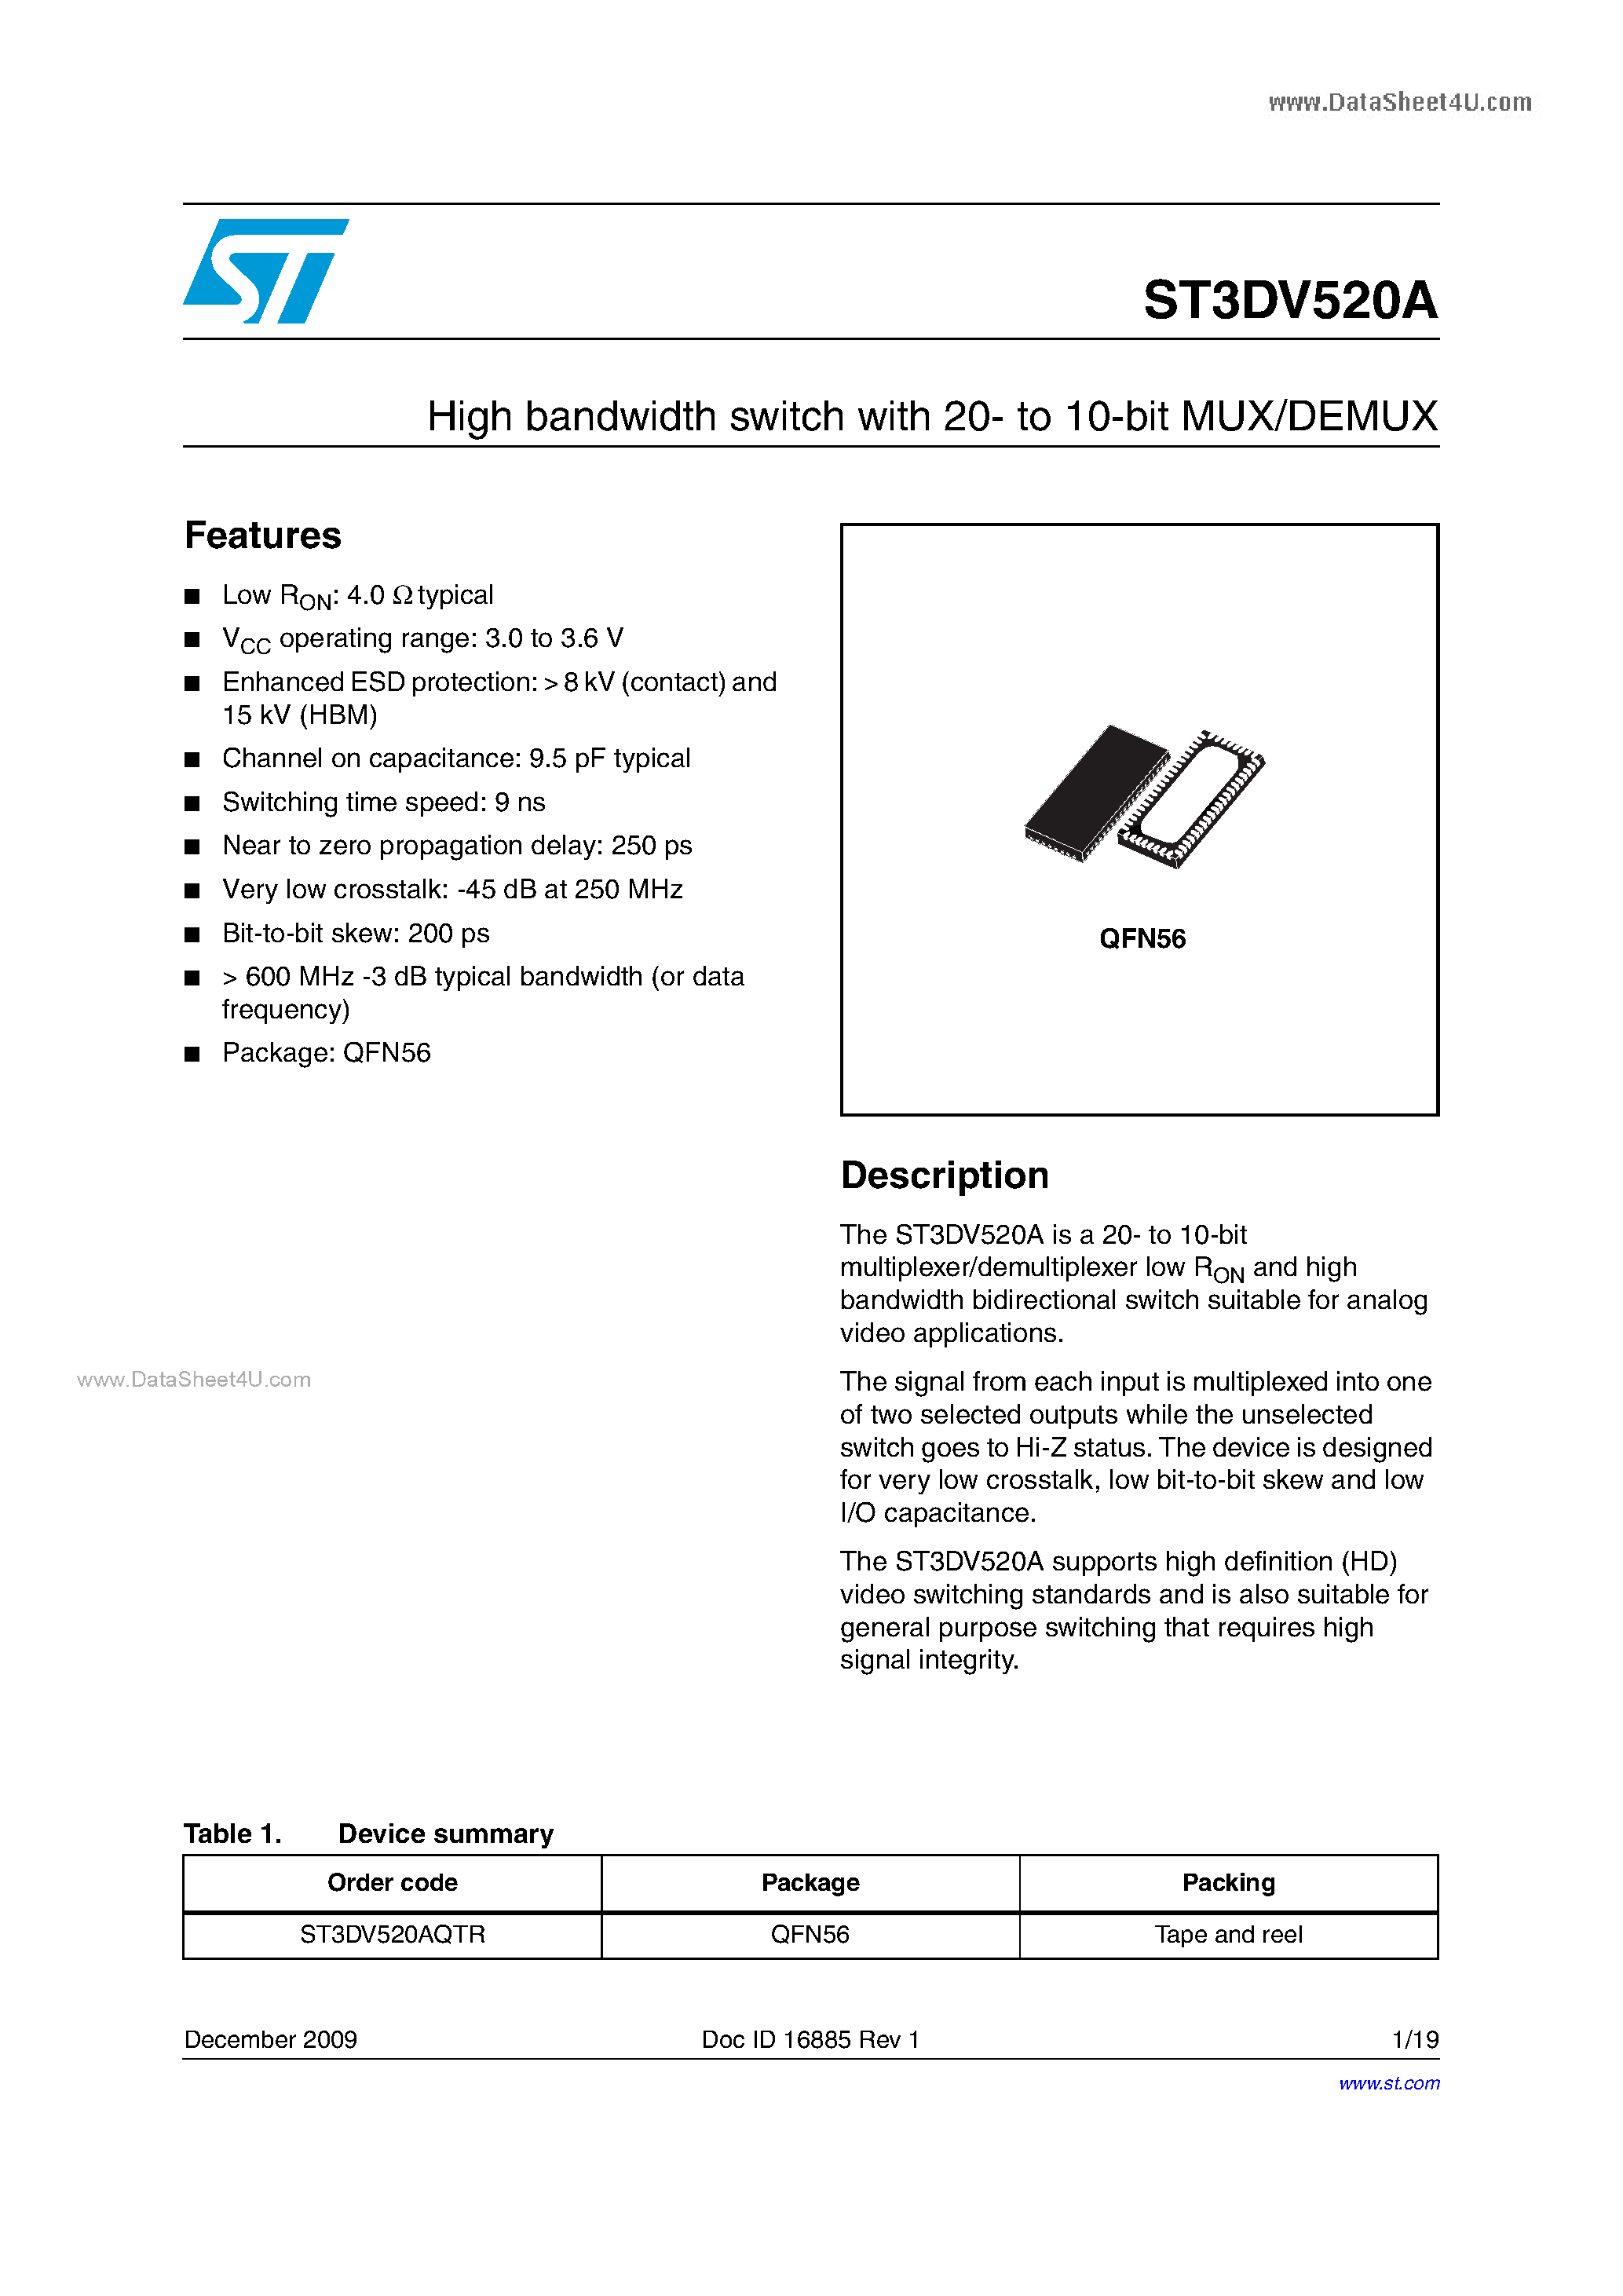 Даташит ST3DV520A - High Bandwidth Switch страница 1